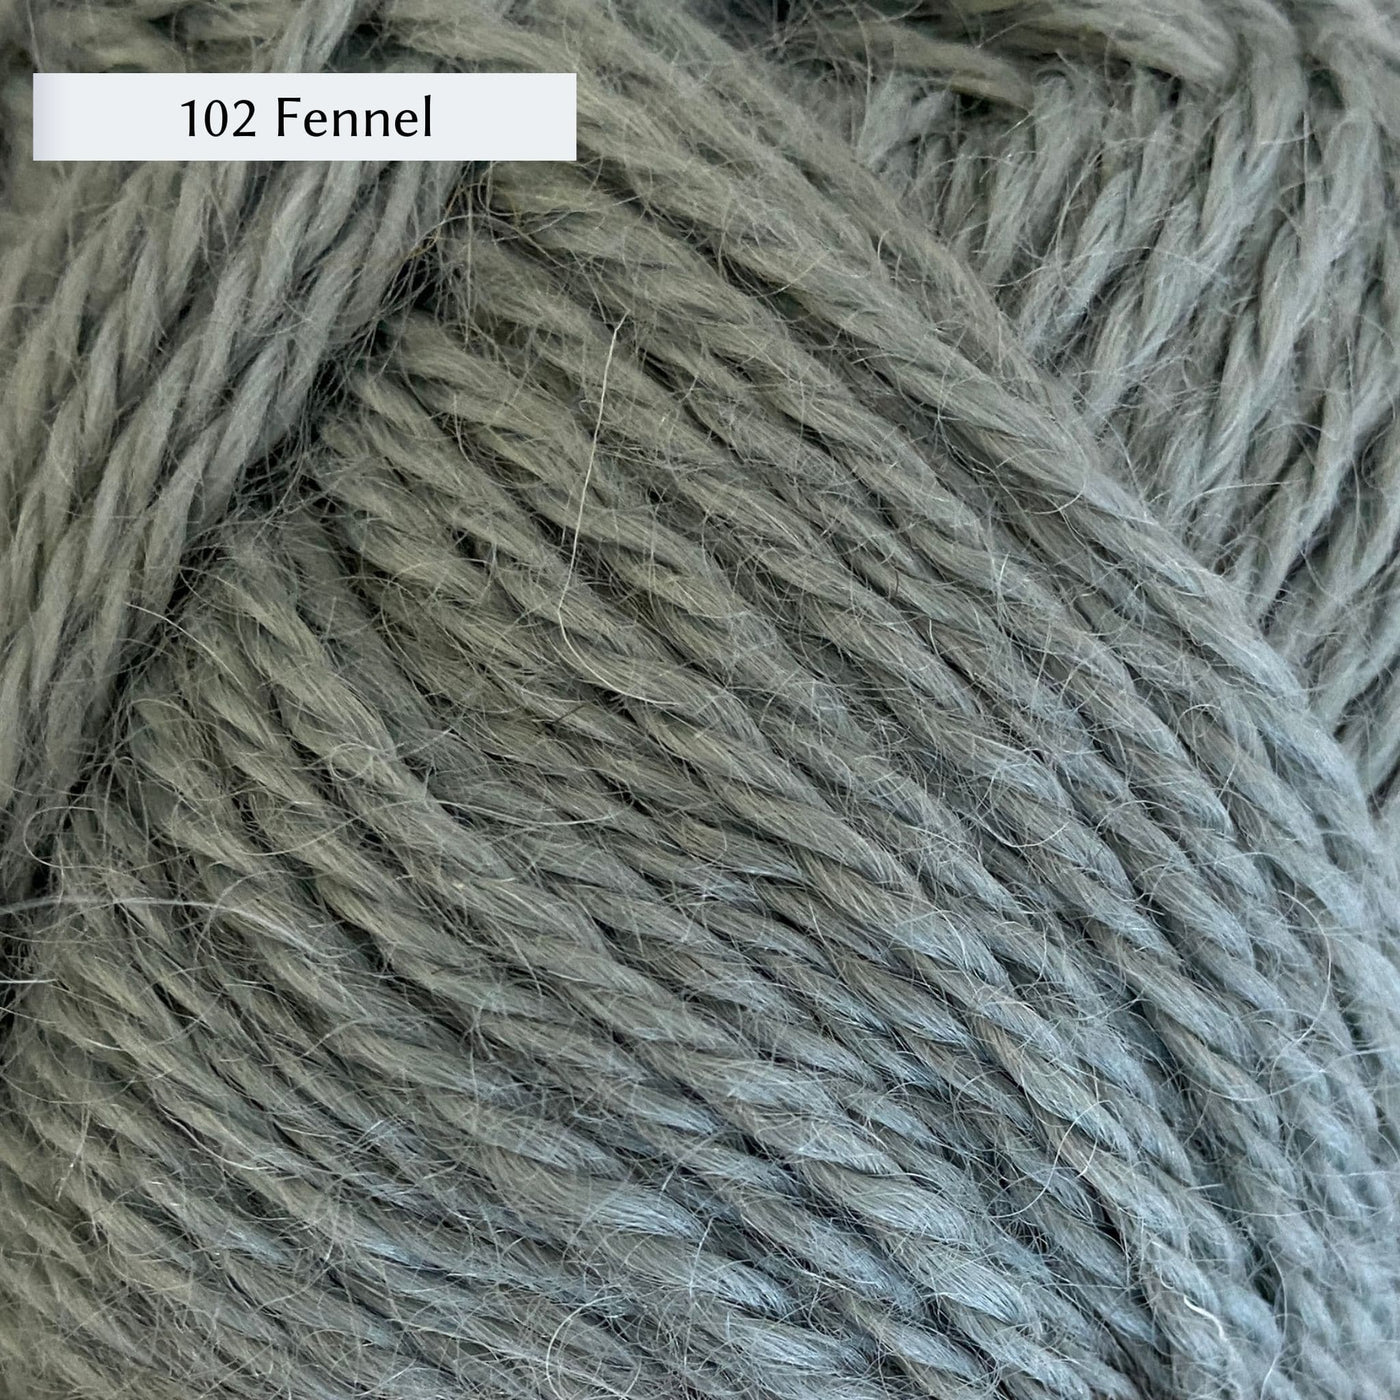 Wensleydale Longwool Aran, an aran weight yarn made from Wensleydale sheep, in color 102 Fennel, a blue-ish very light green